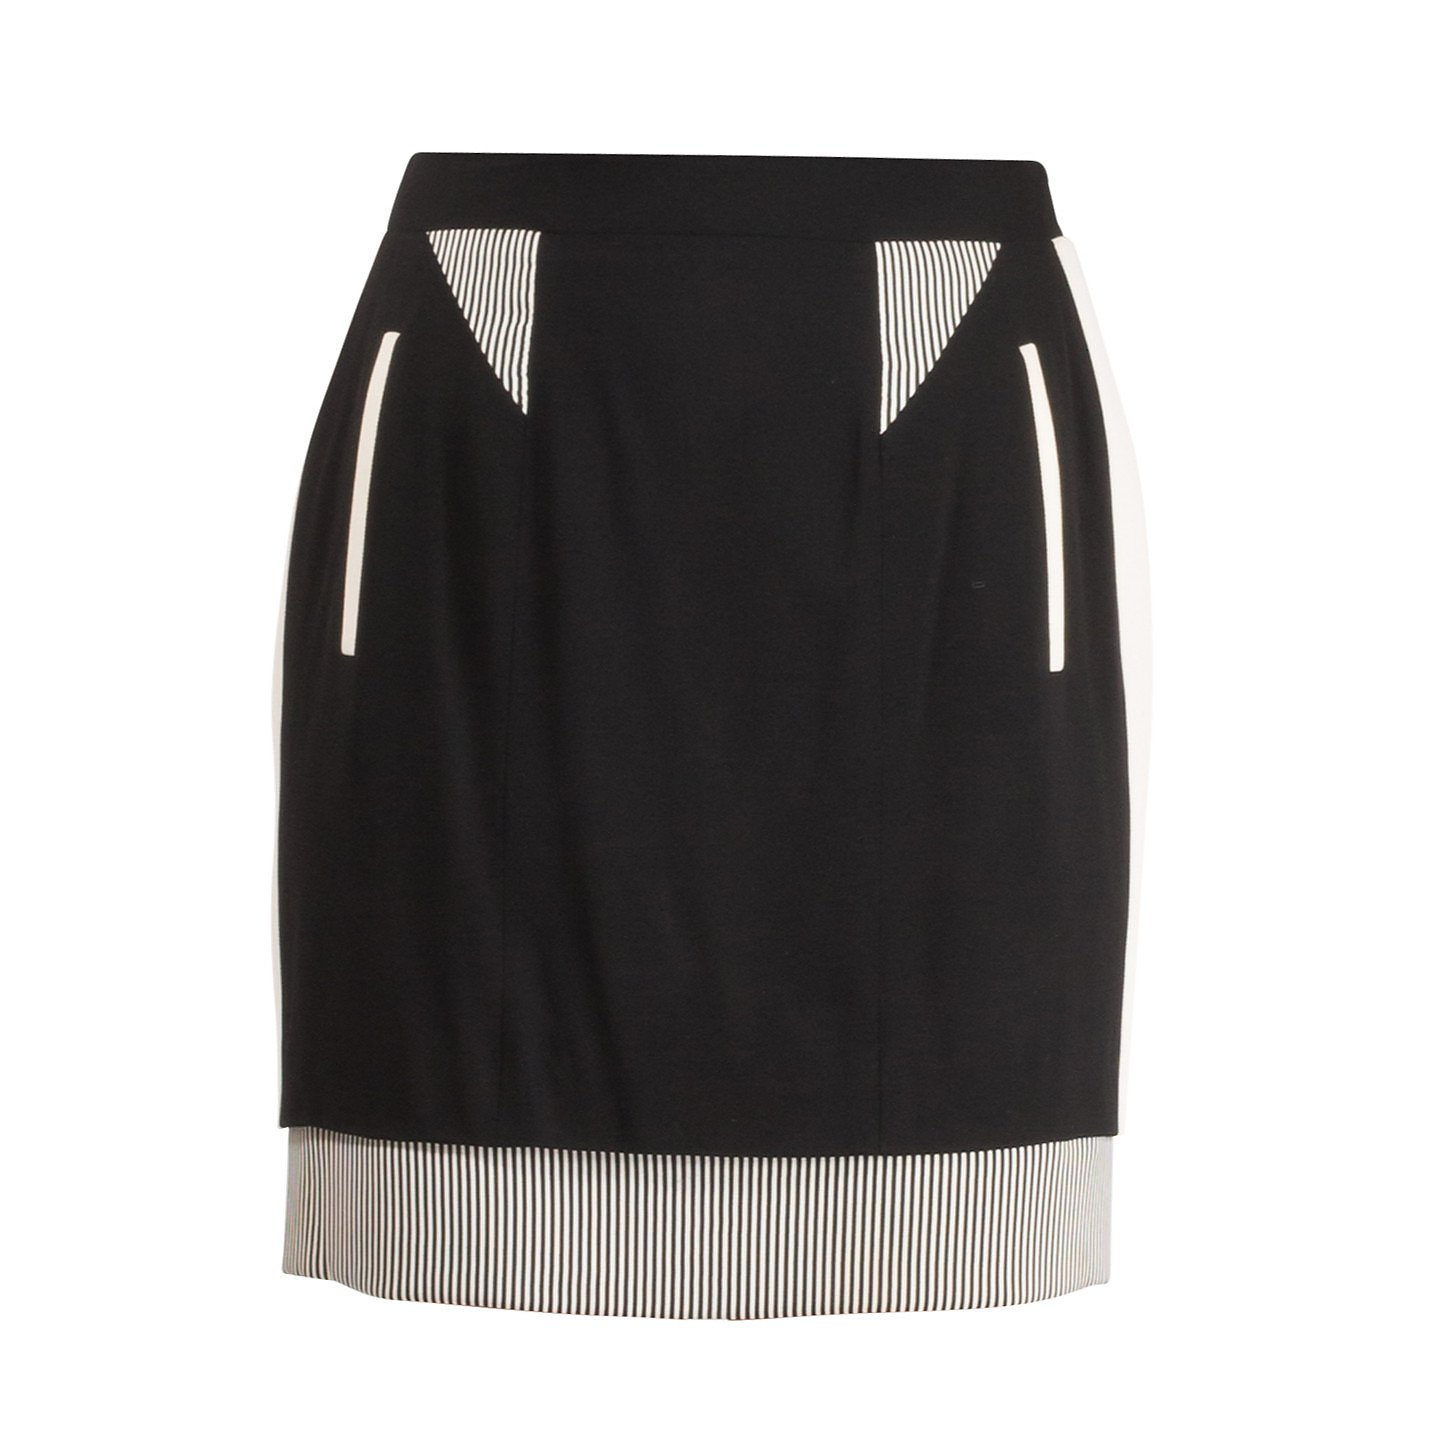 Jonathan Saunders Mini Skirt With Stripe Details